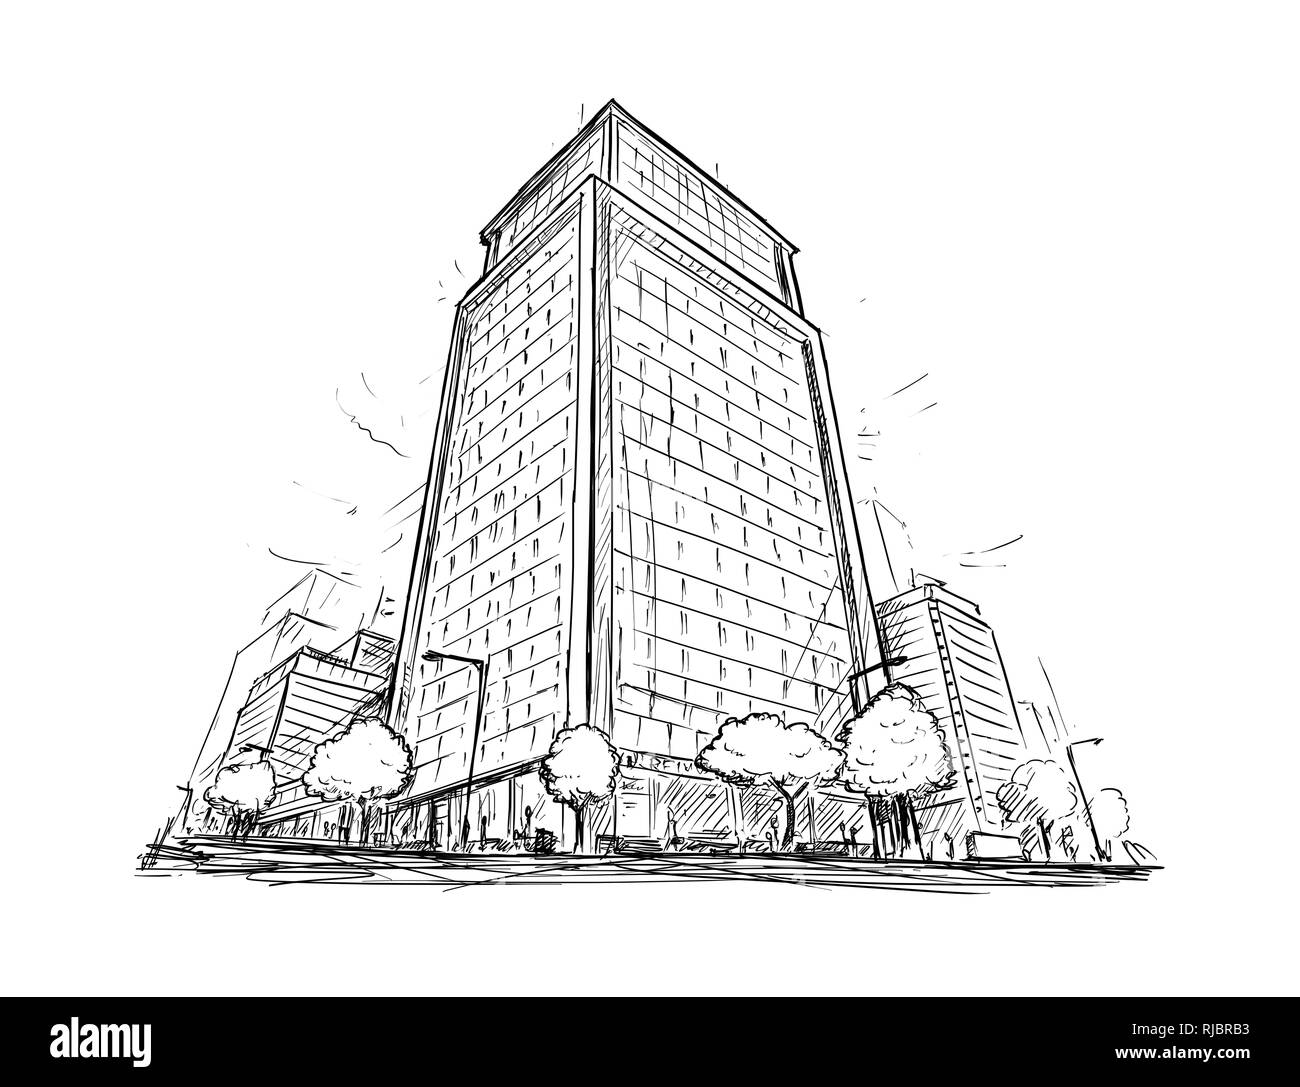 https://c8.alamy.com/comp/RJBRB3/drawing-of-city-street-high-rise-building-RJBRB3.jpg